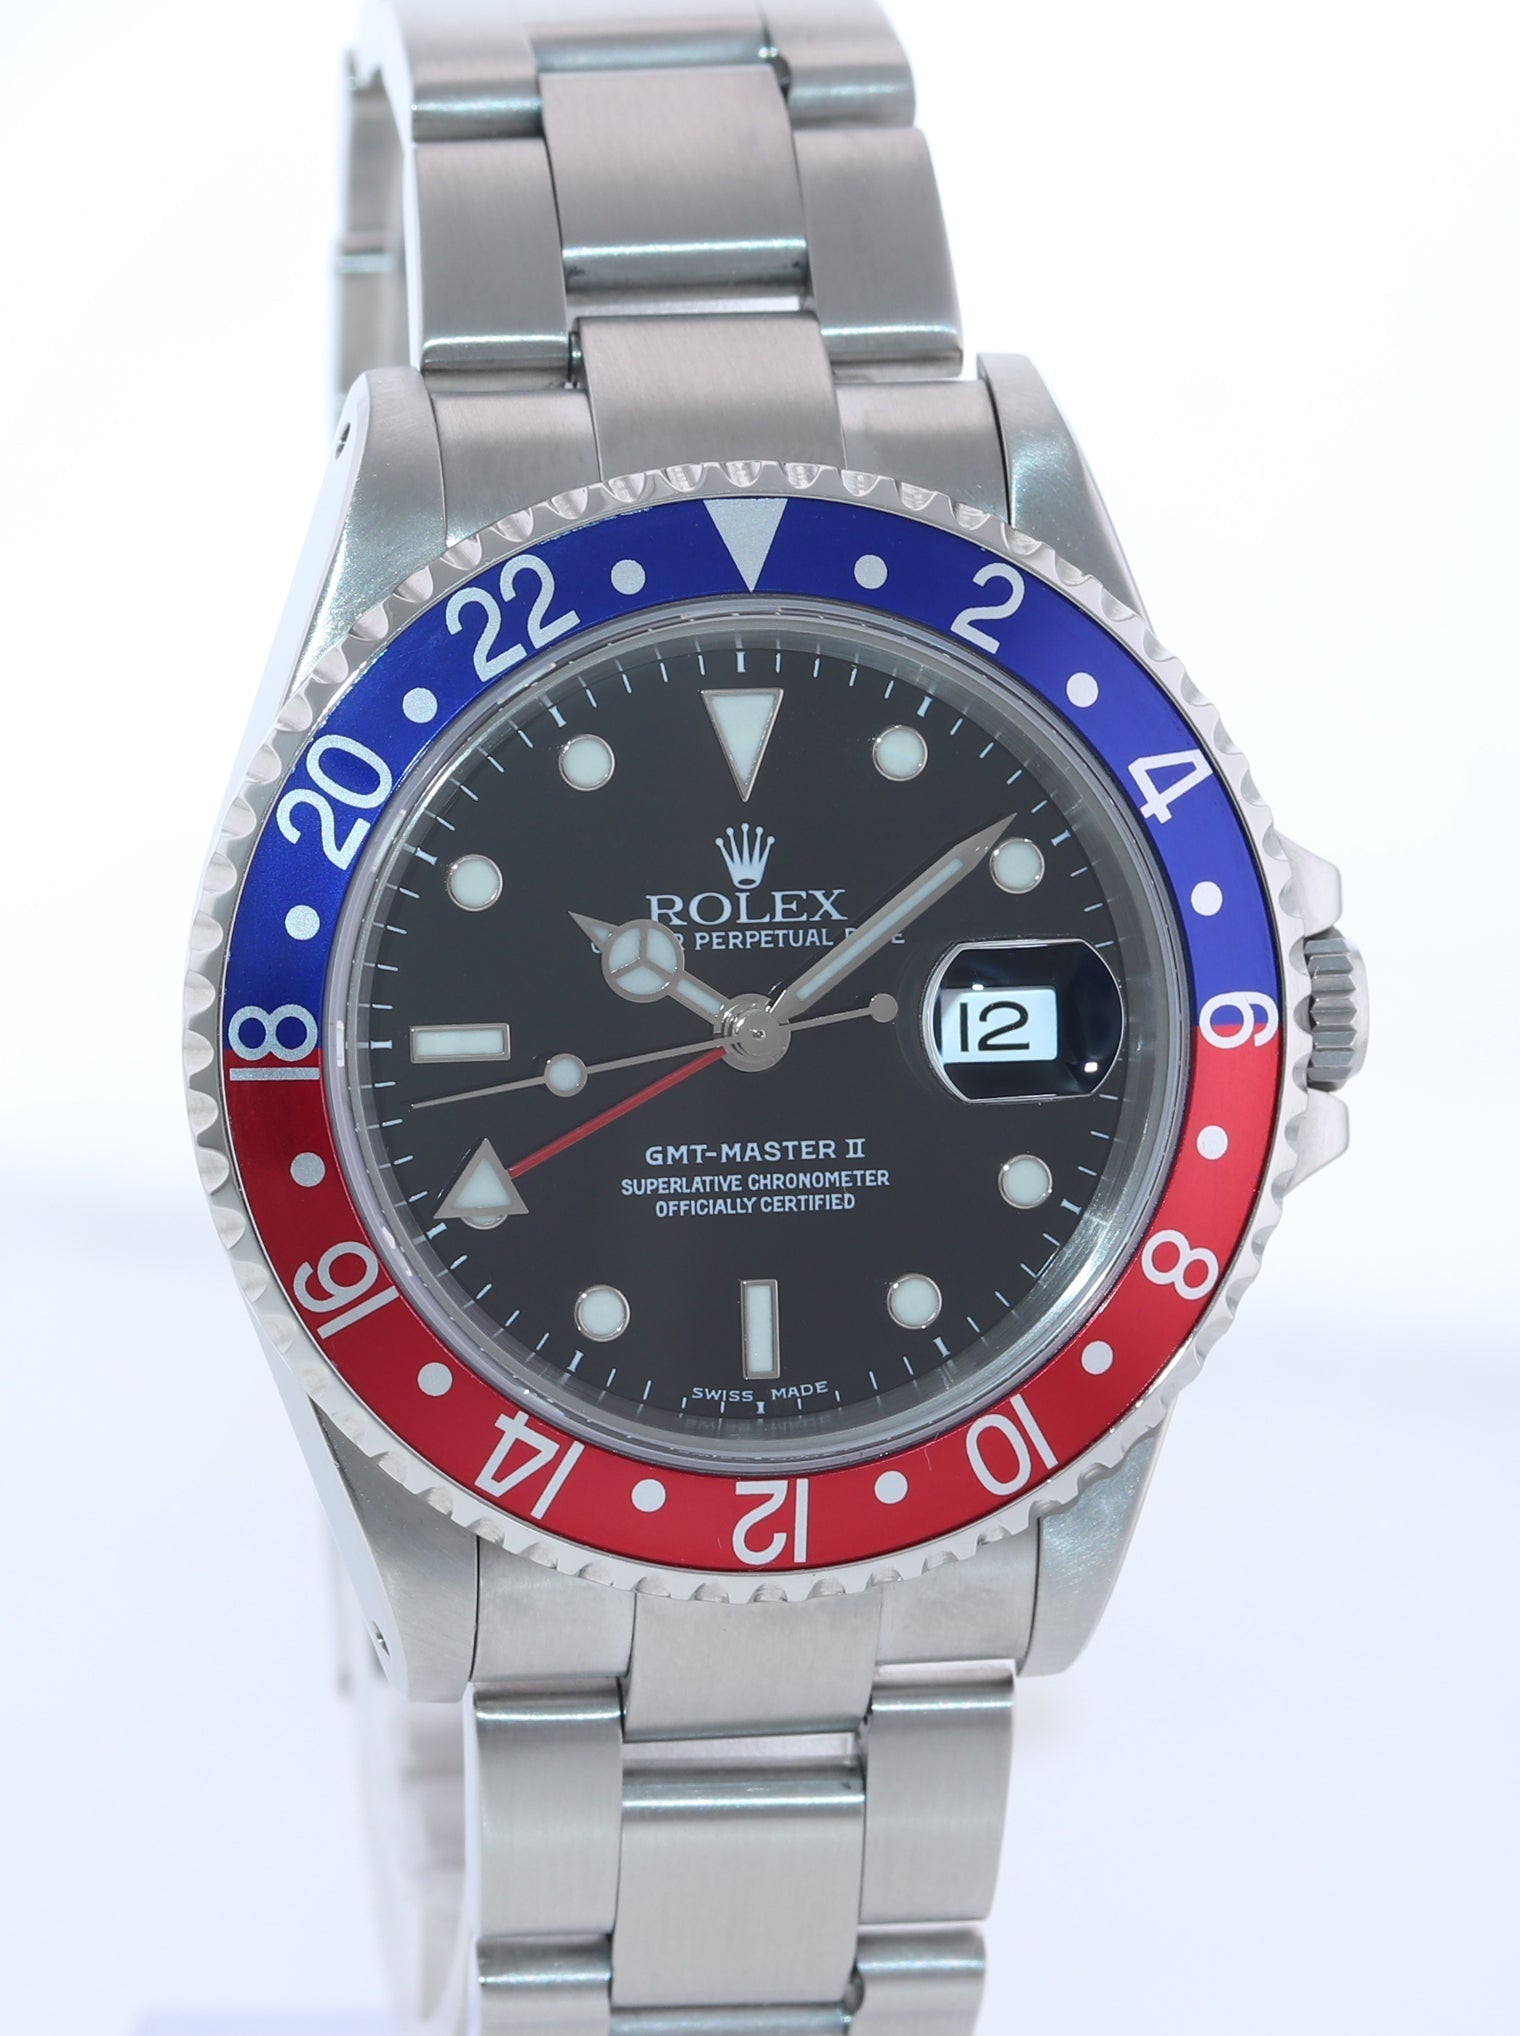 2000 Rolex GMT-Master II Pepsi 40mm Steel Blue Red 16710 Watch Box